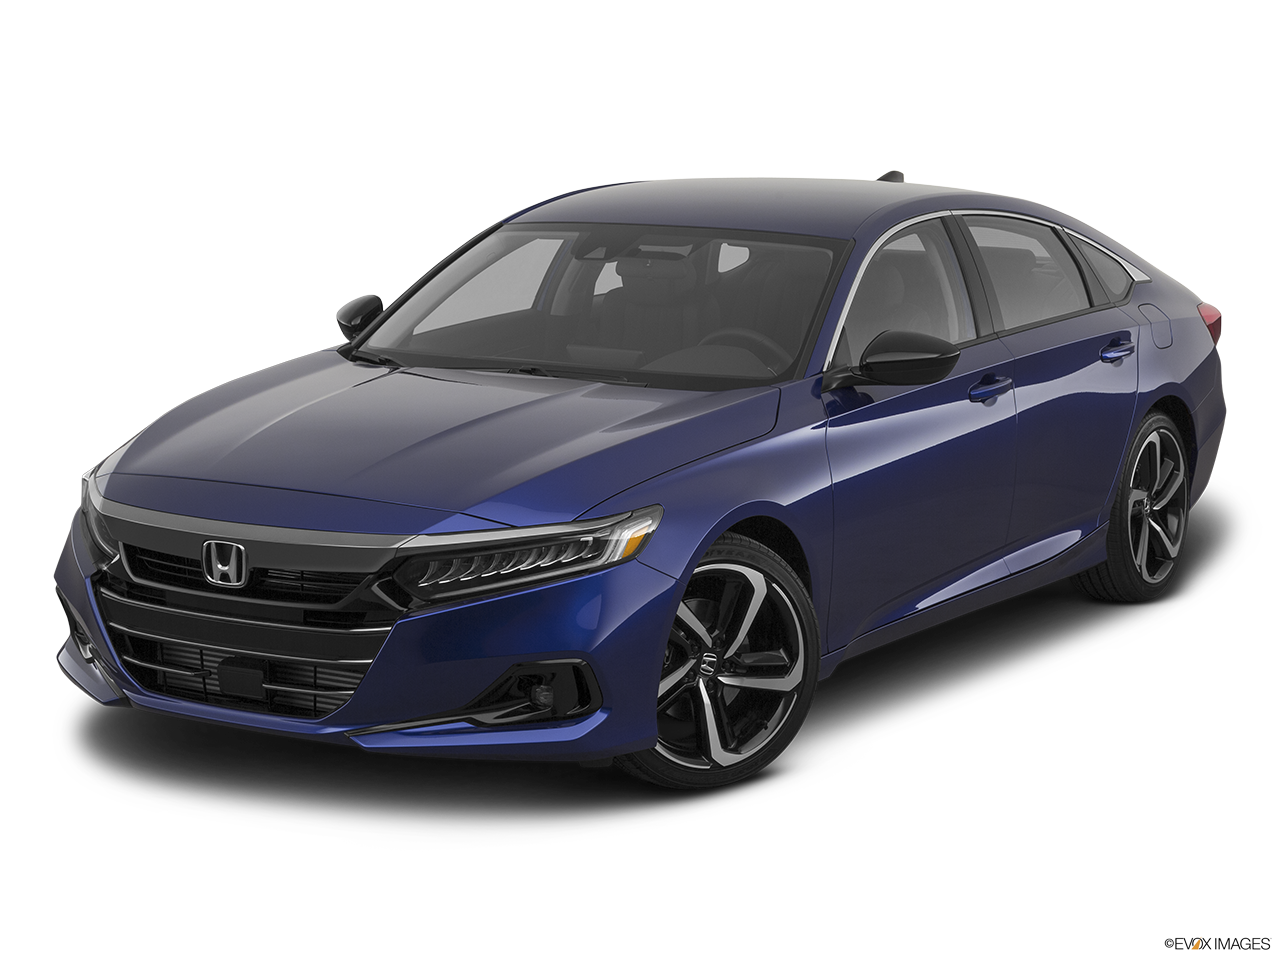 Wireless CarPlay upgrade coming to select Honda Accords